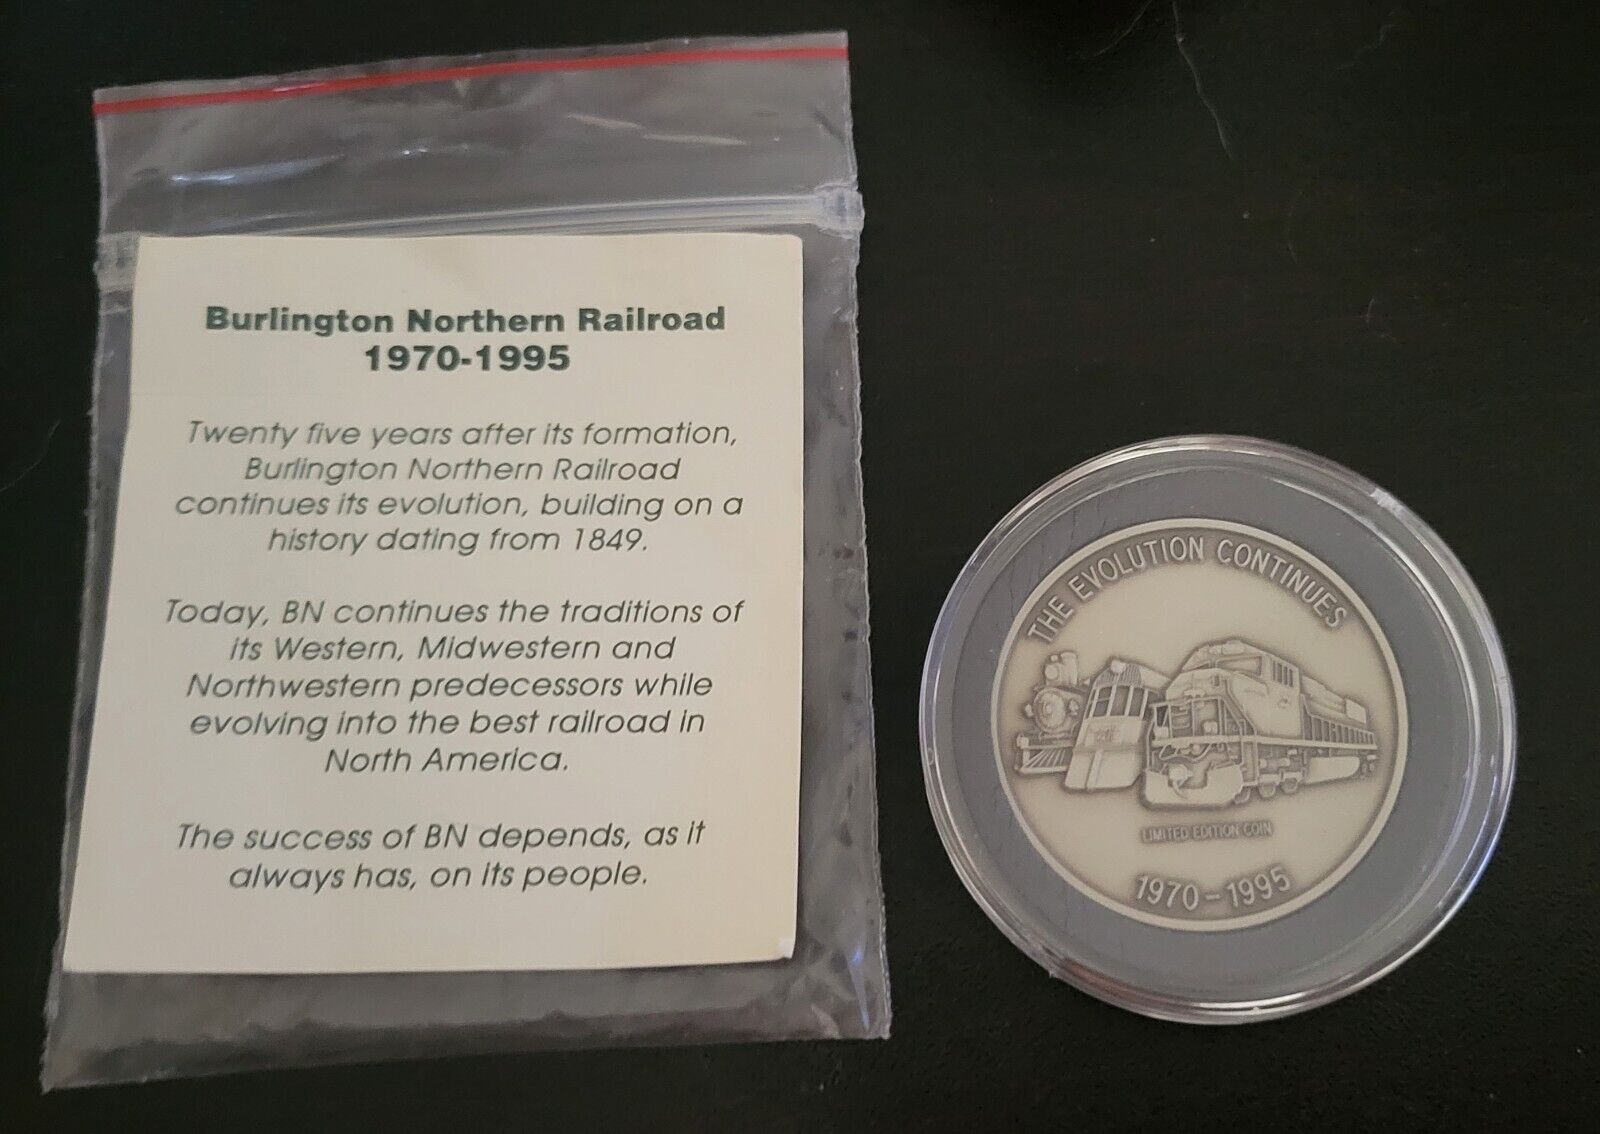 VTG\'95 Burlington Northern Railroad 25th Anniversary Coin LE Employee Issue +COA